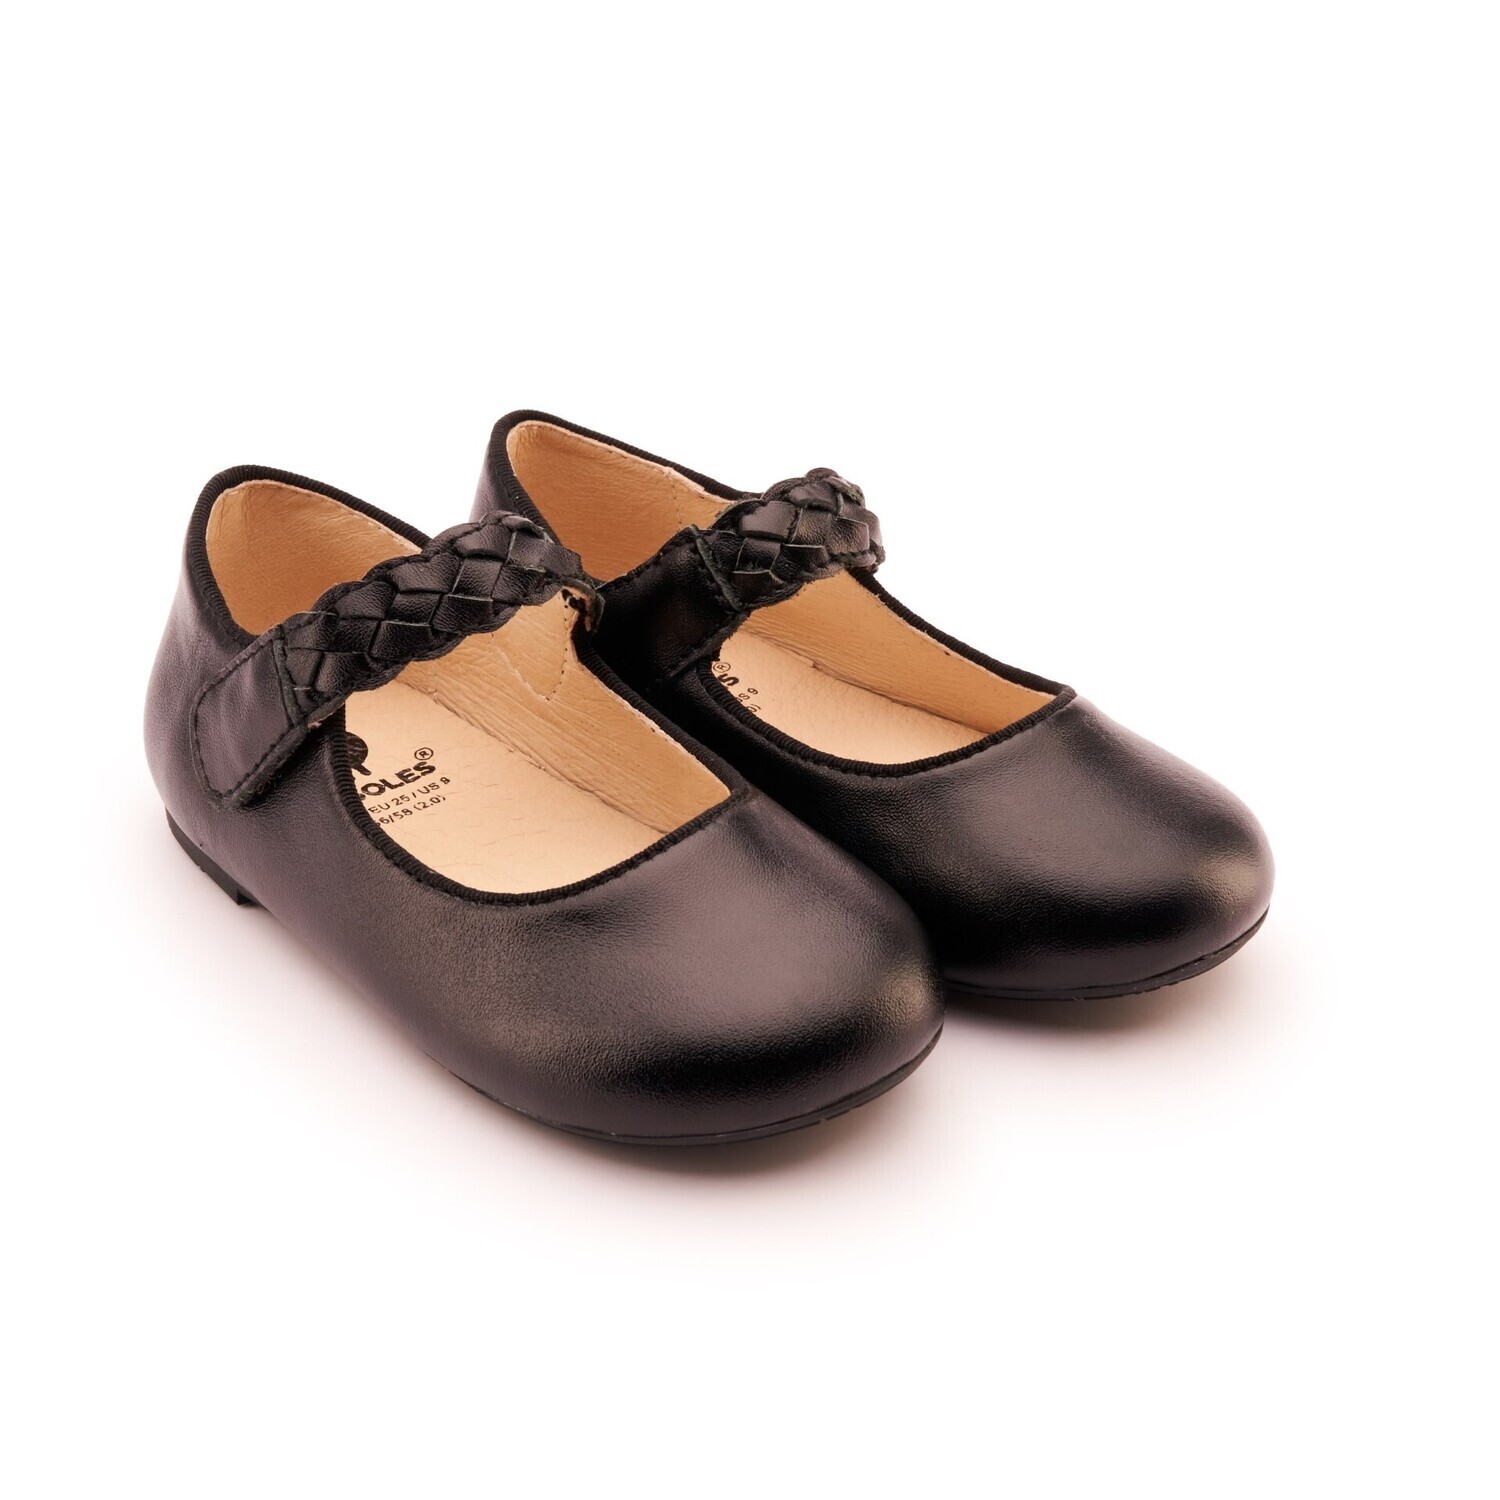 Old Soles Lady Plat - Black Shoes*